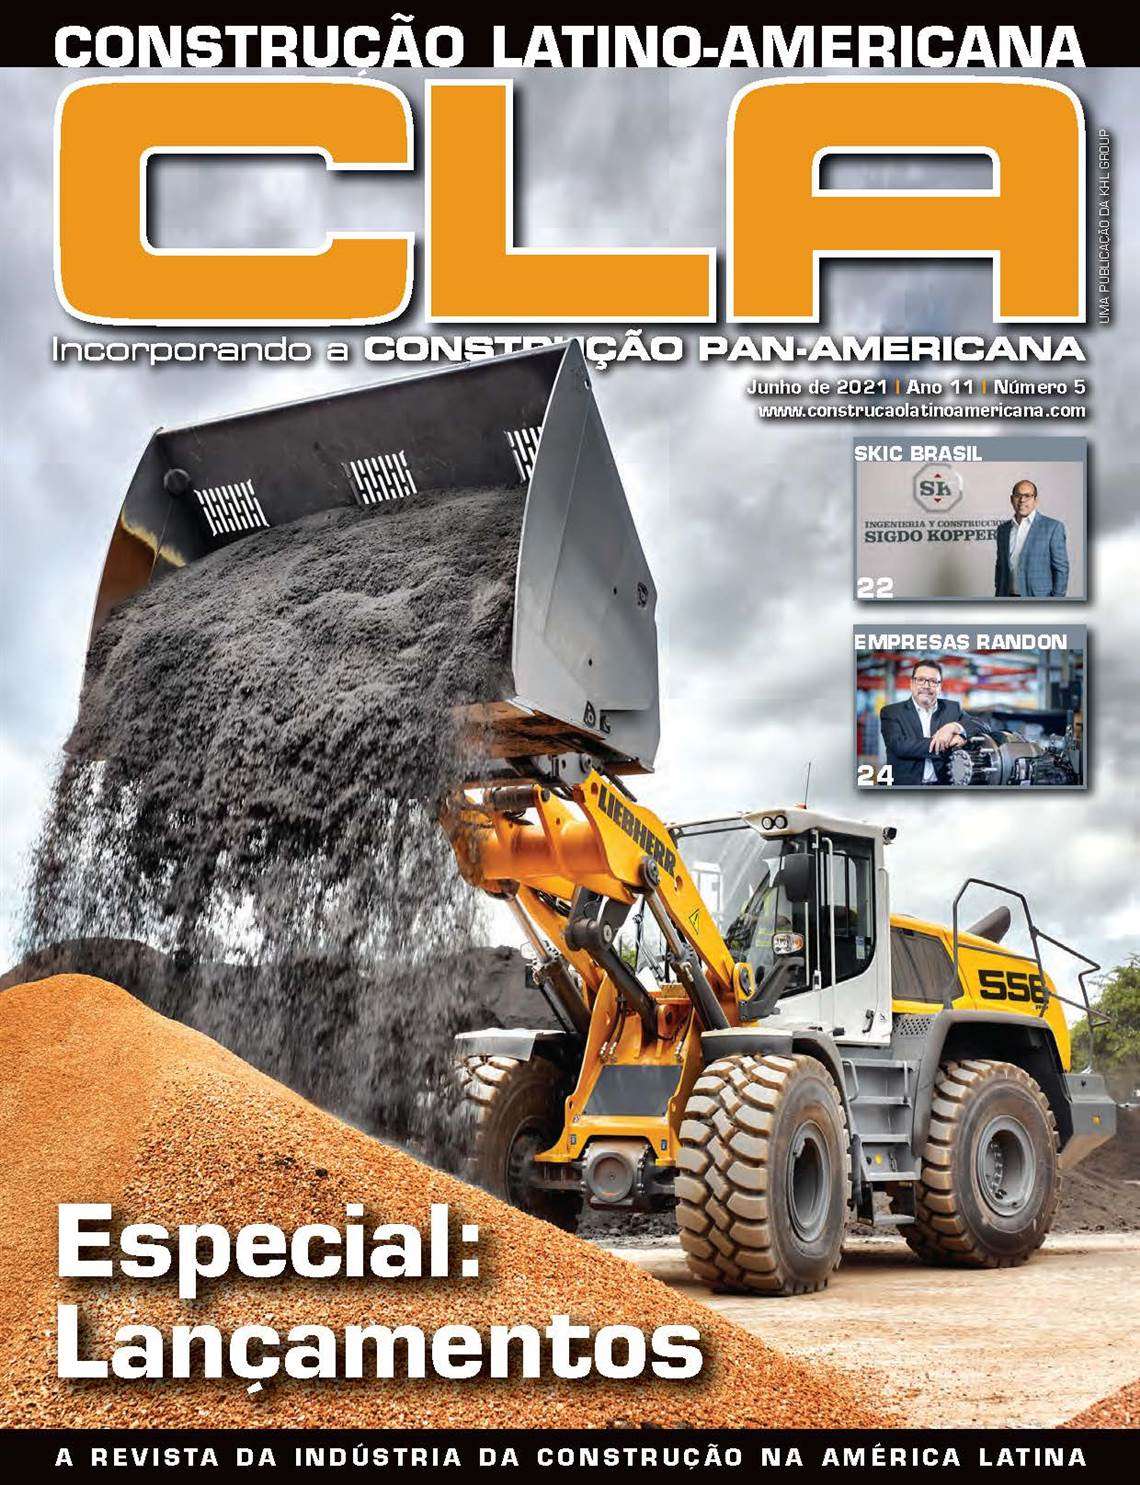  Construction Latin America magazine